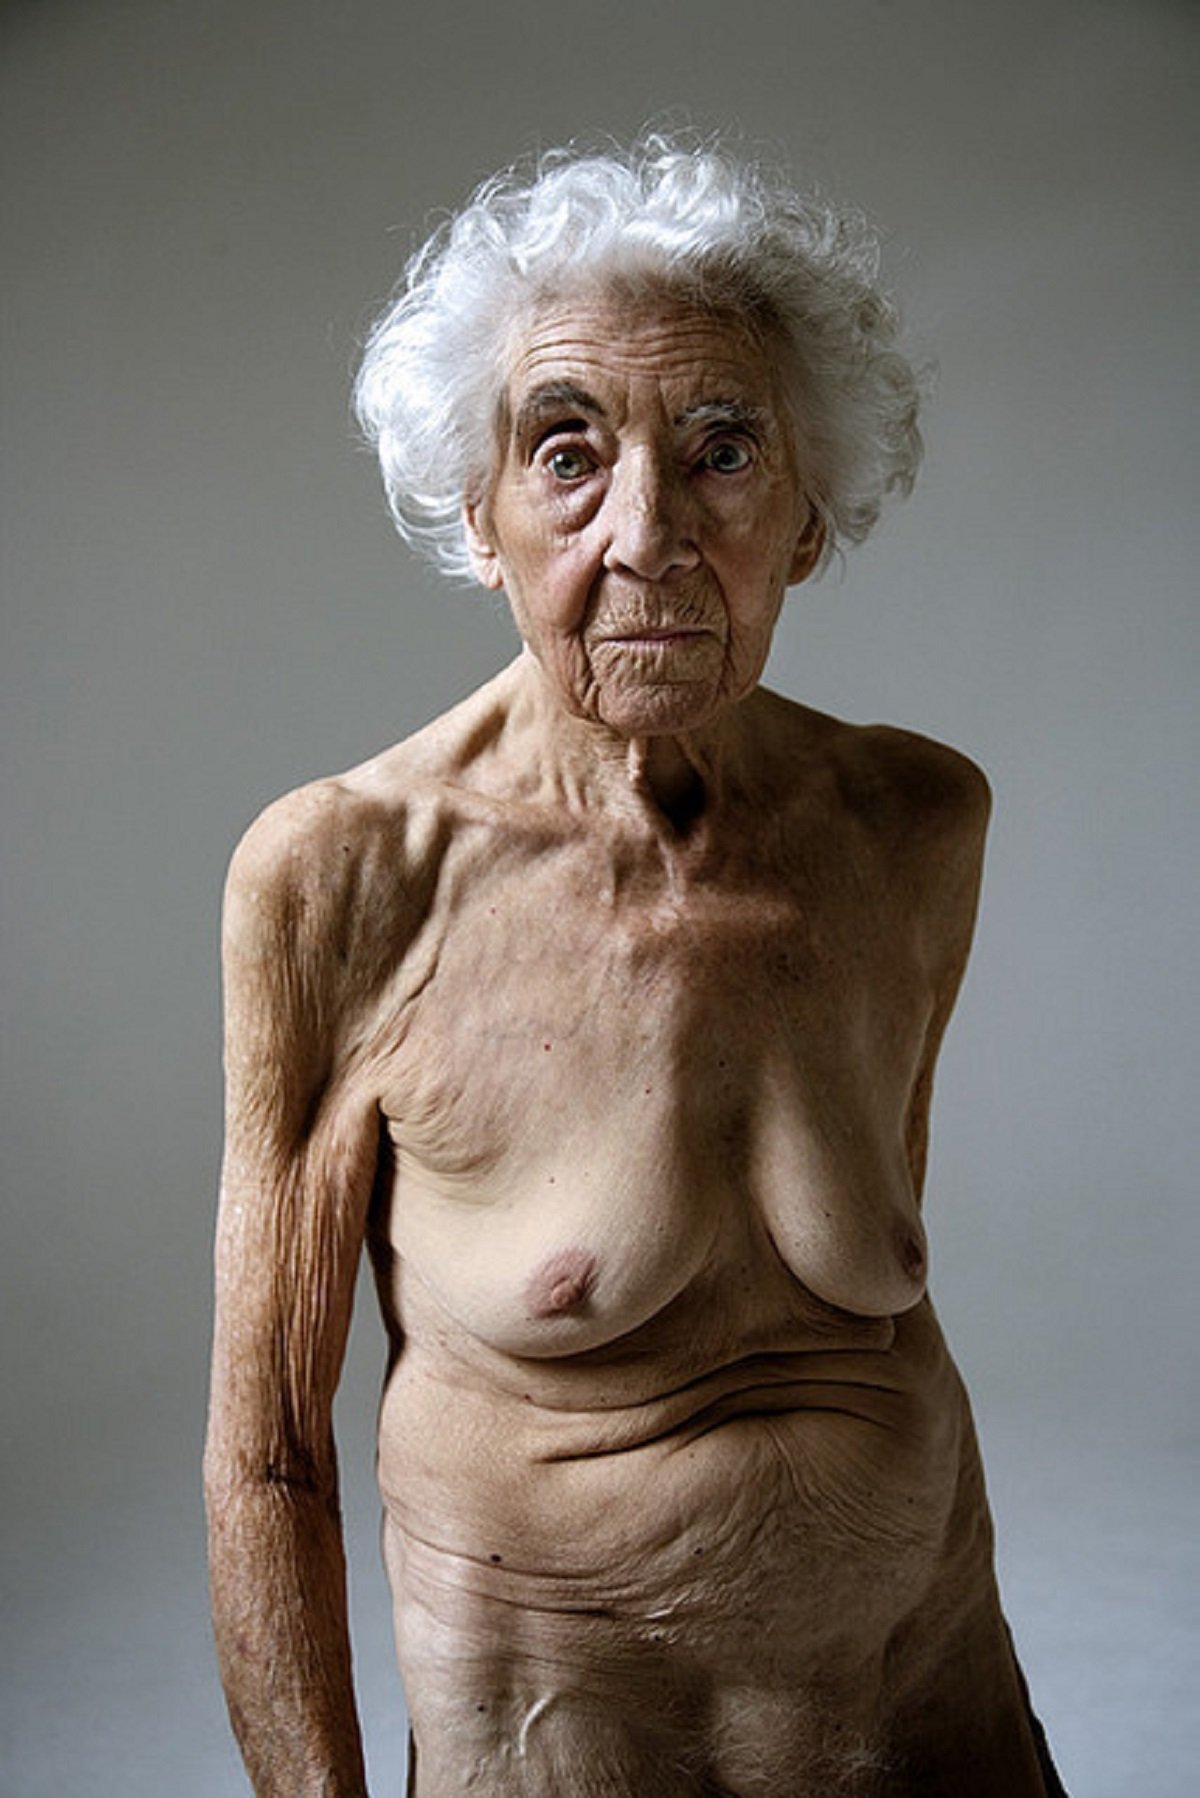 antonio matanguihan add extremely old naked women photo